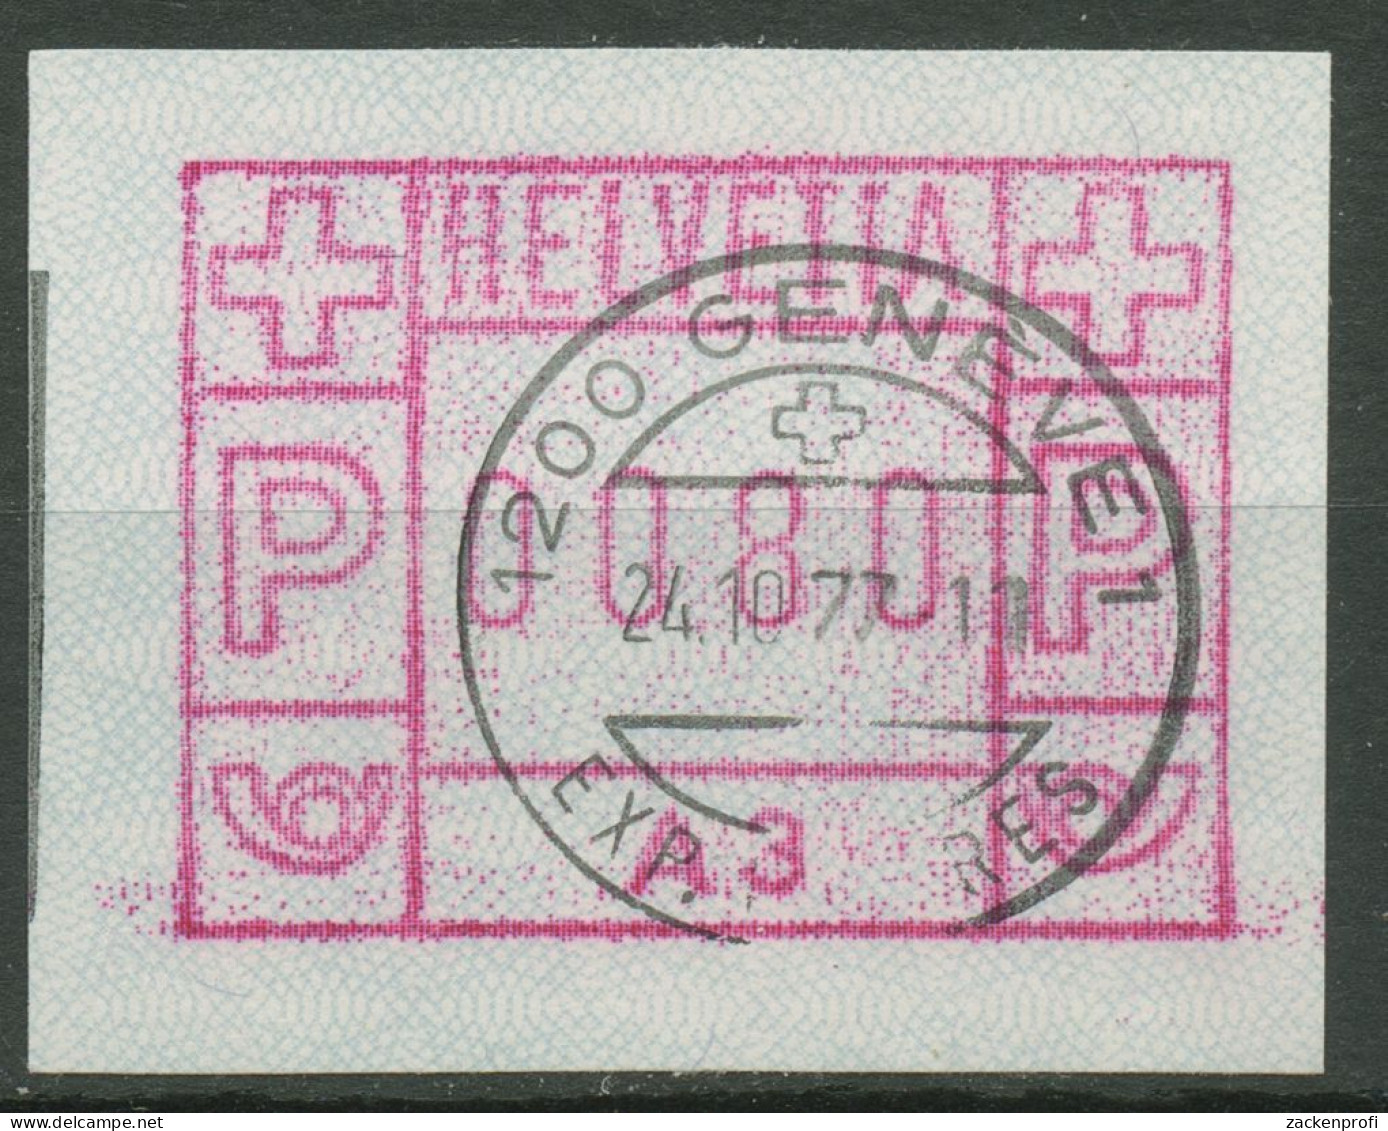 Schweiz Automatenmarken 1976 ATM 1 A 3 Gestempelt - Automatic Stamps